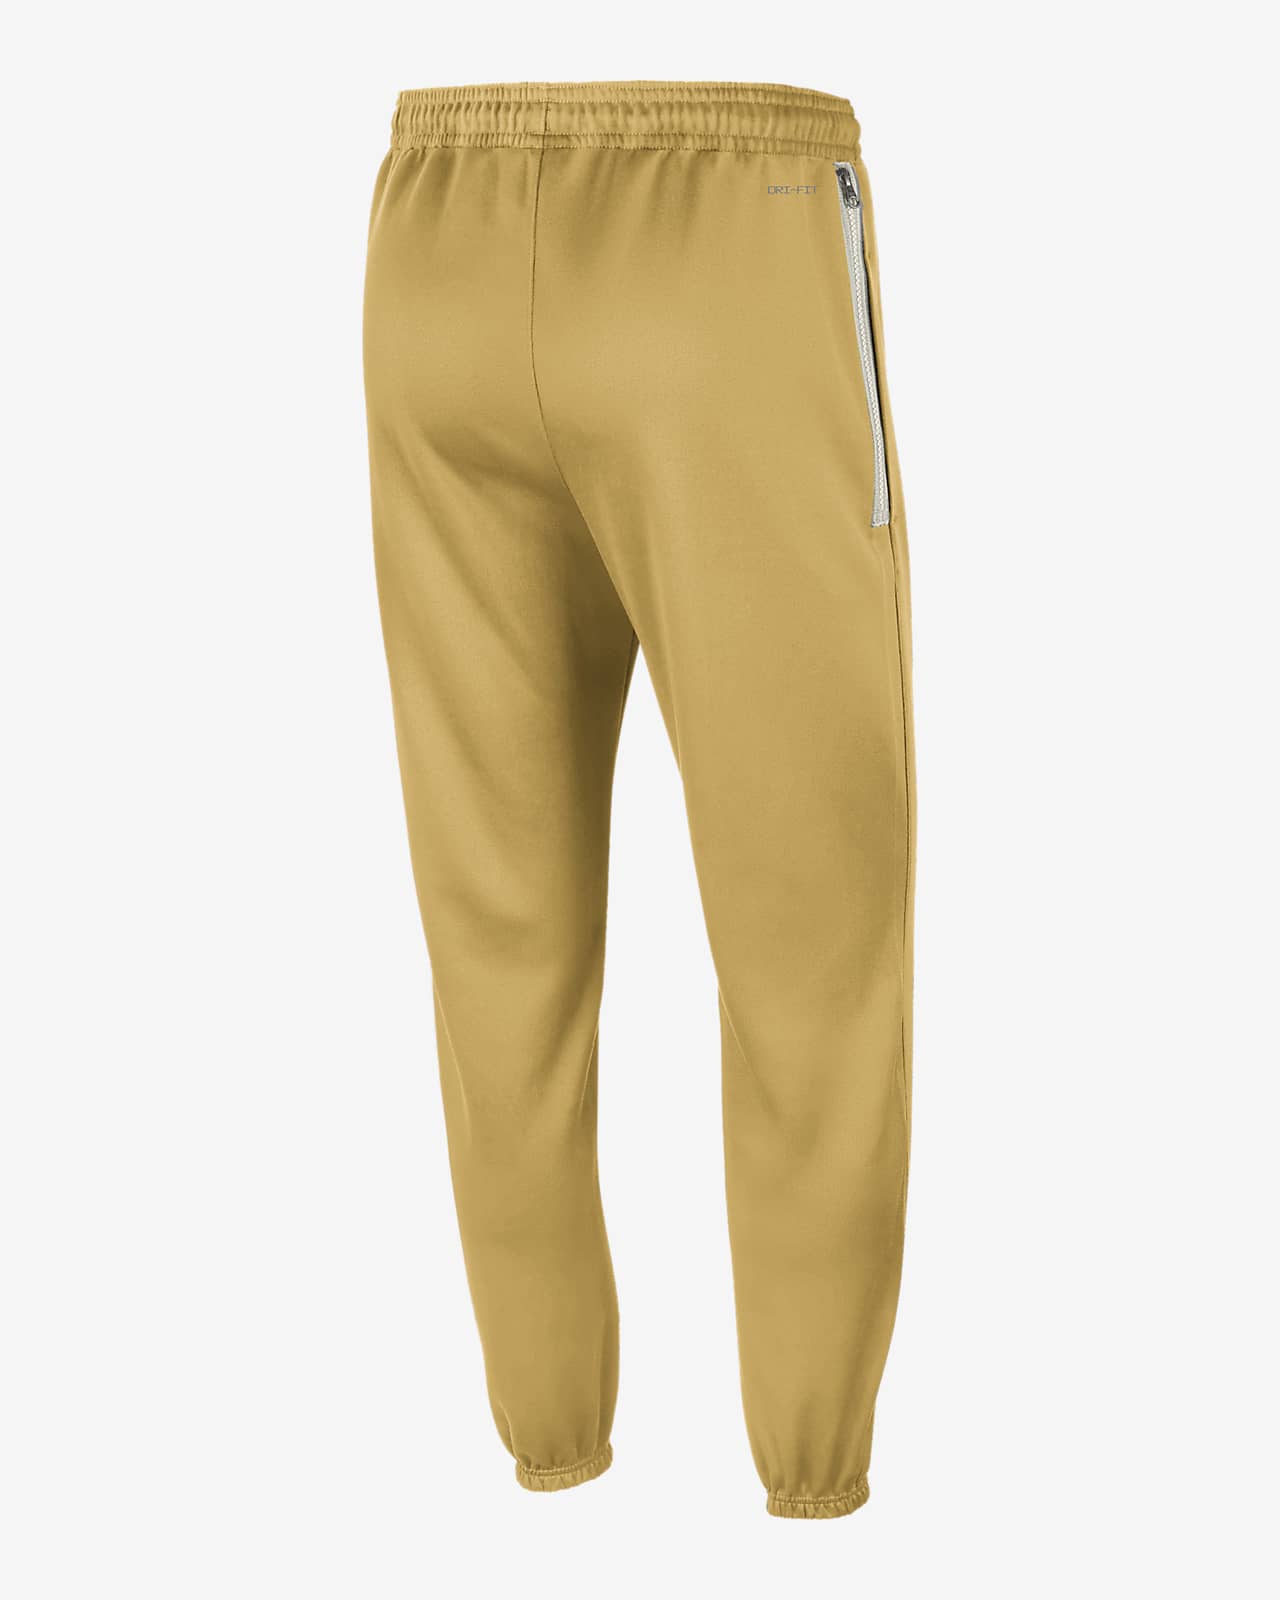 Golden State Warriors Standard Issue Men's Nike Dri-FIT NBA Pants.